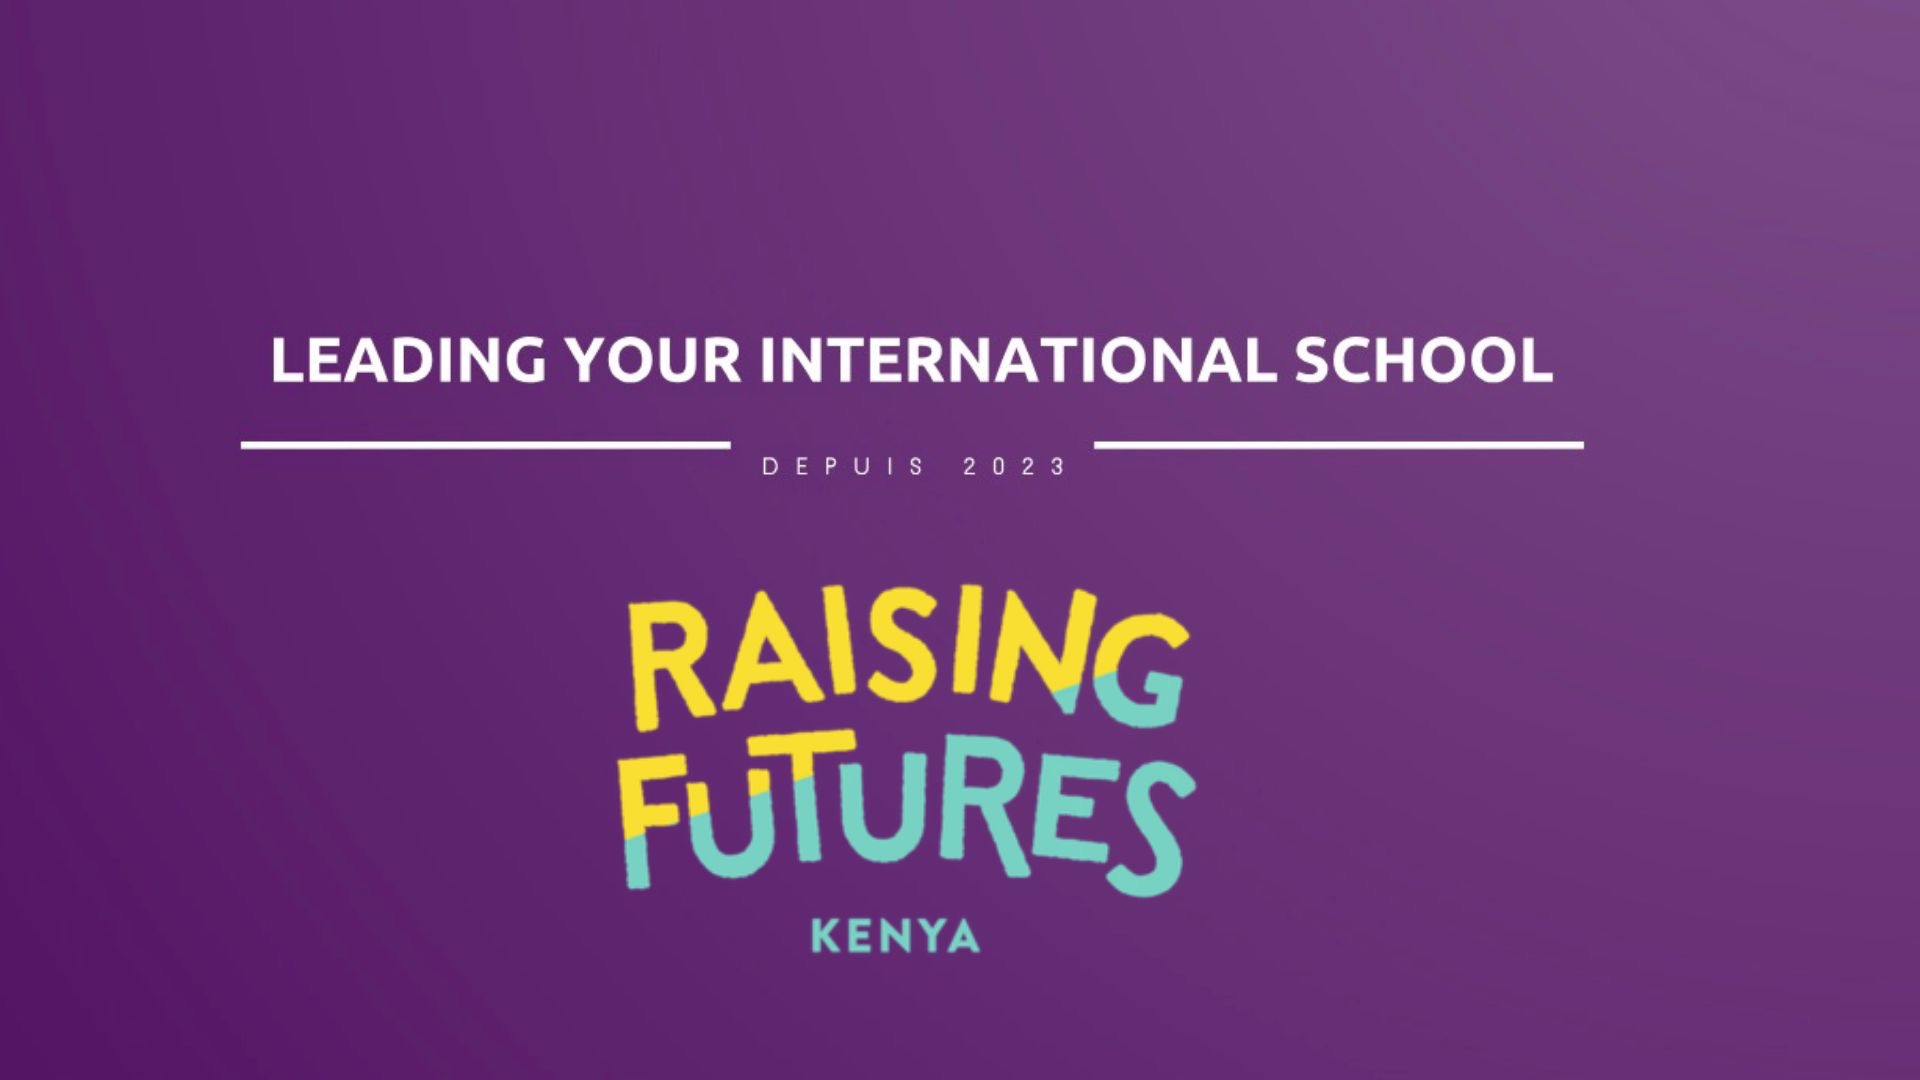 Leading Your International School to Help Raise Futures in Kenya